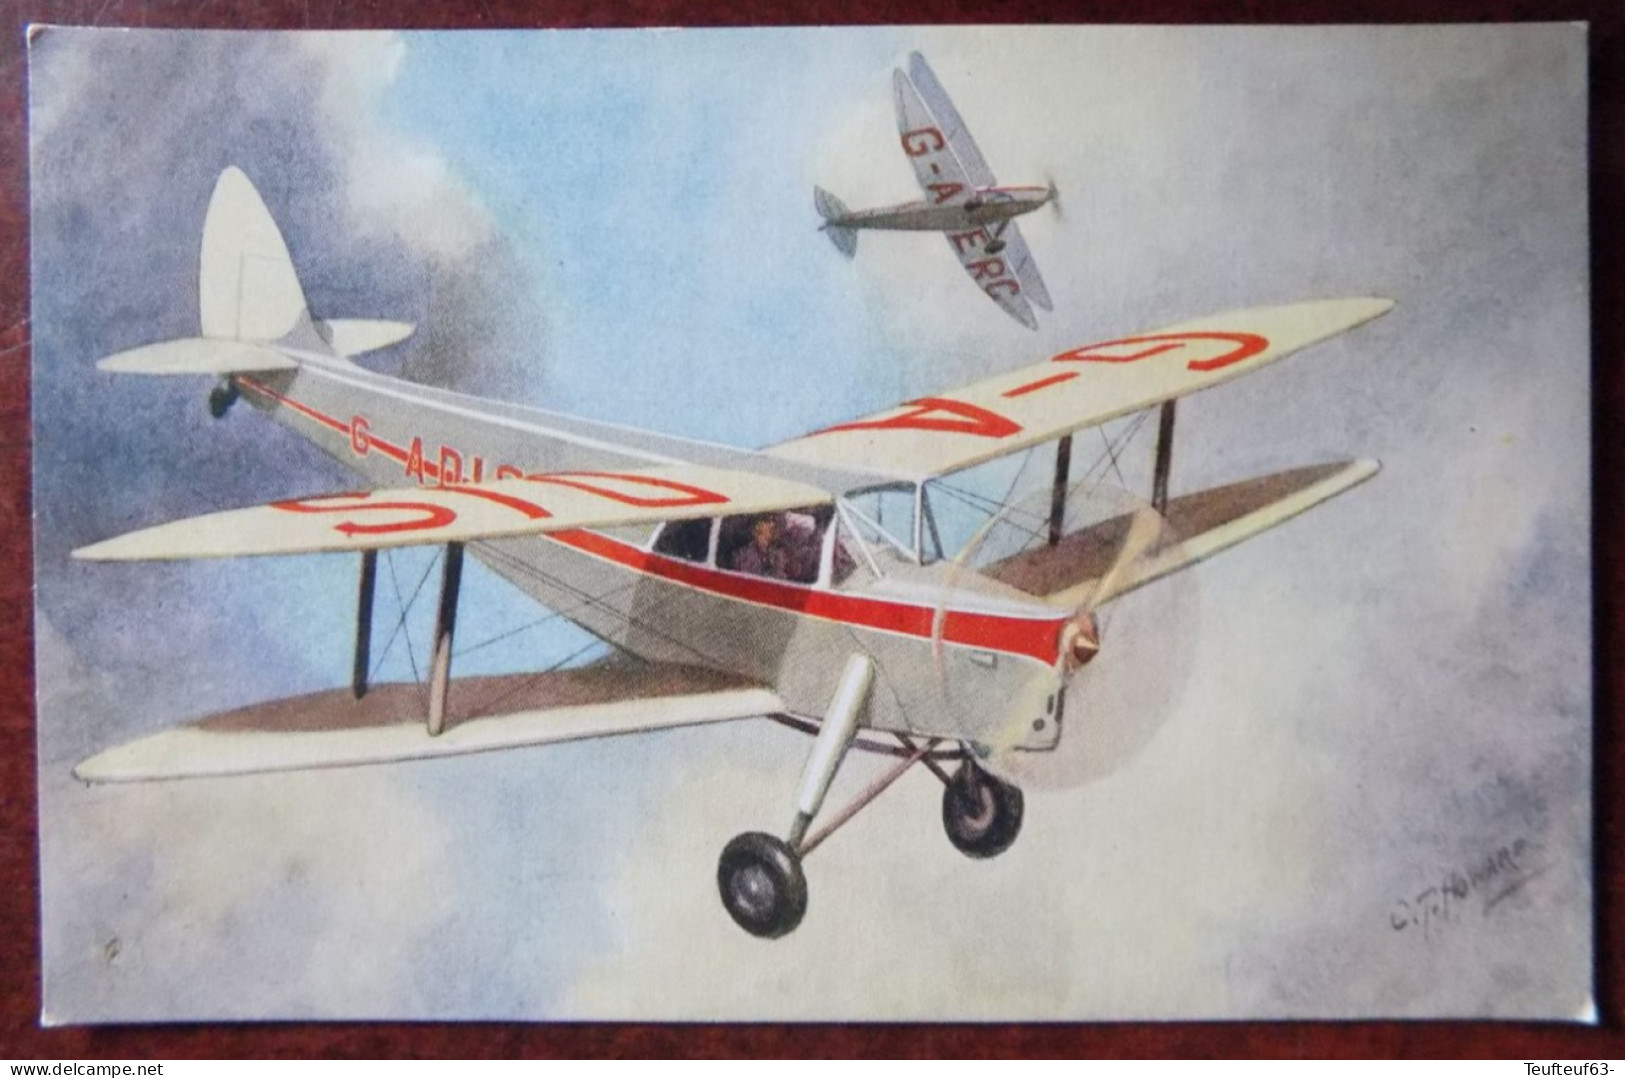 Cpa De Havilland " Hornet Moth "  - Ill. Howard - 1919-1938: Entre Guerras